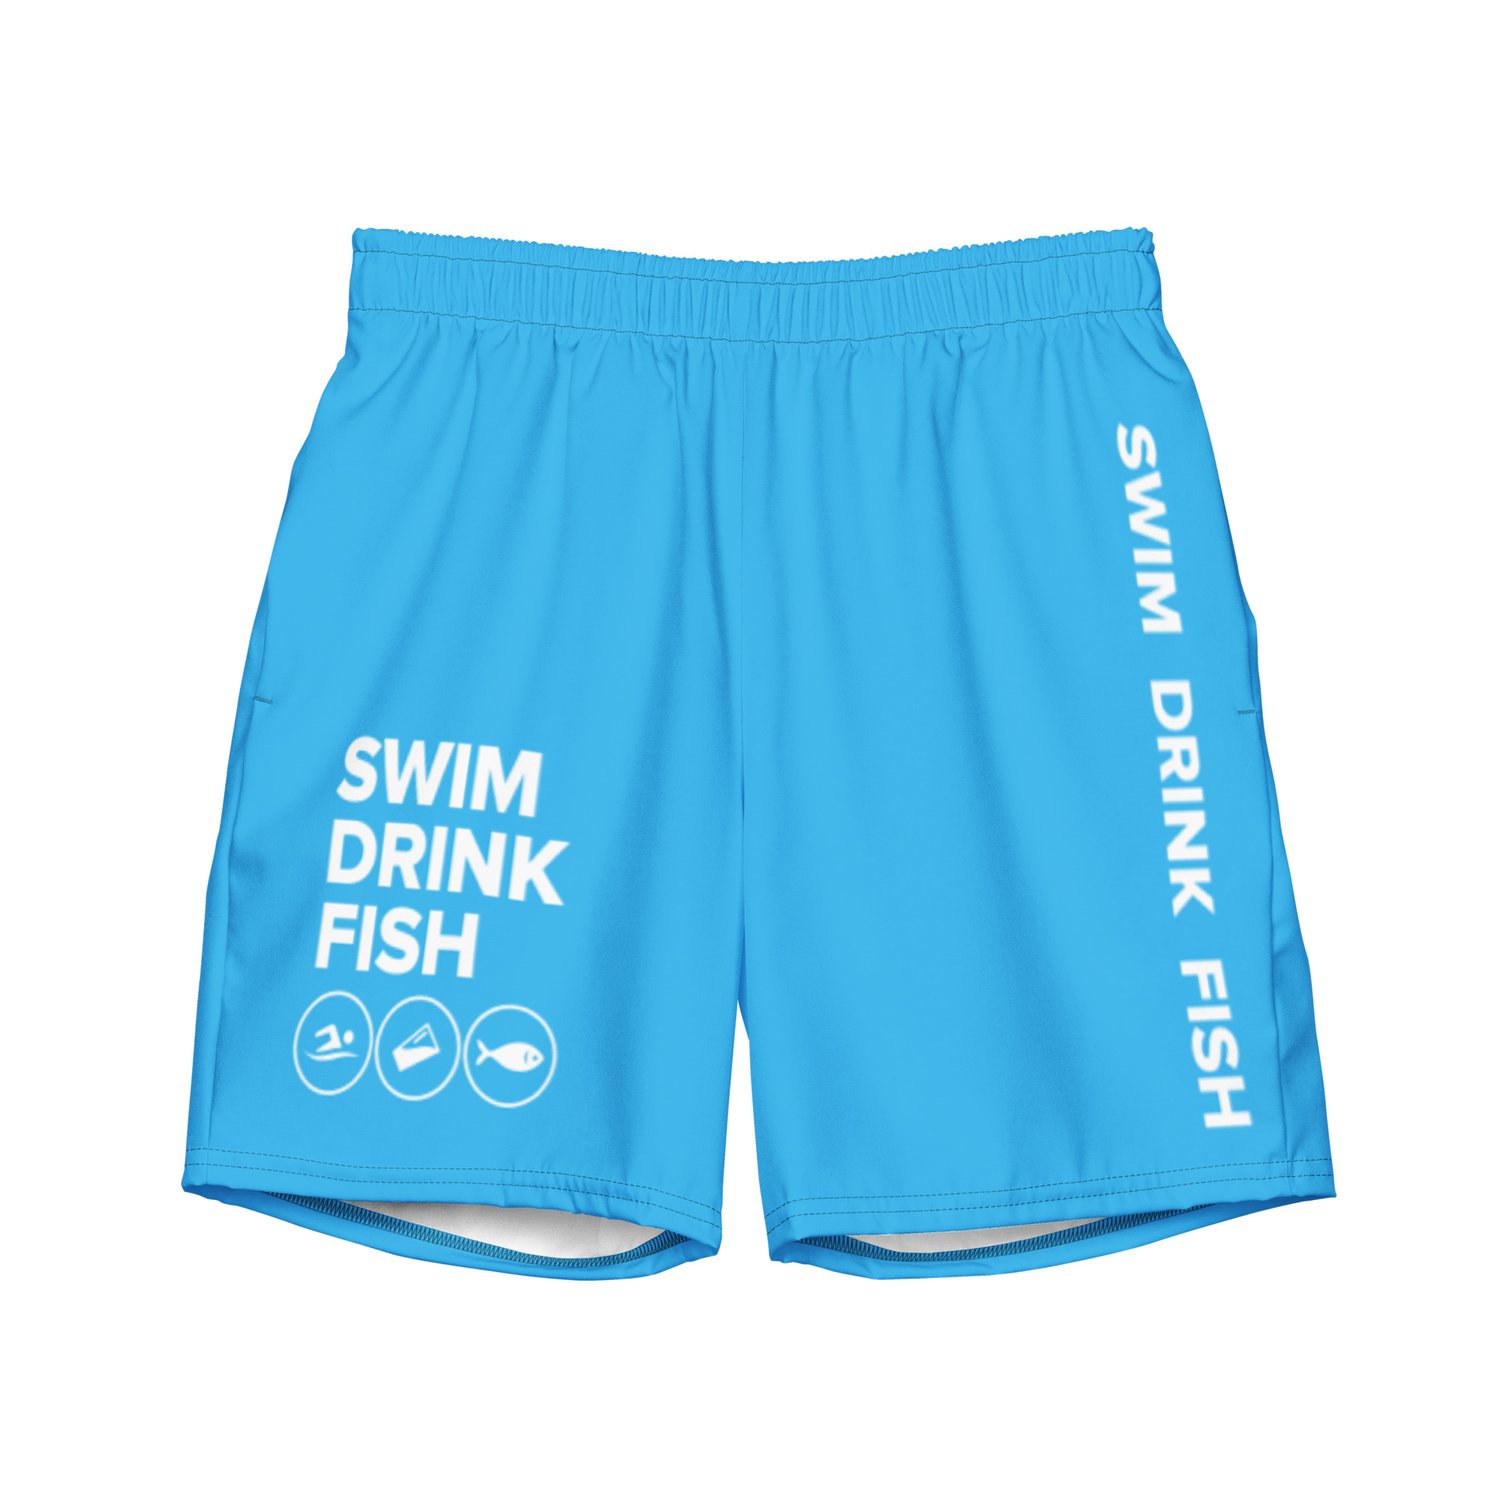 Swim trunks — Swim Drink Fish